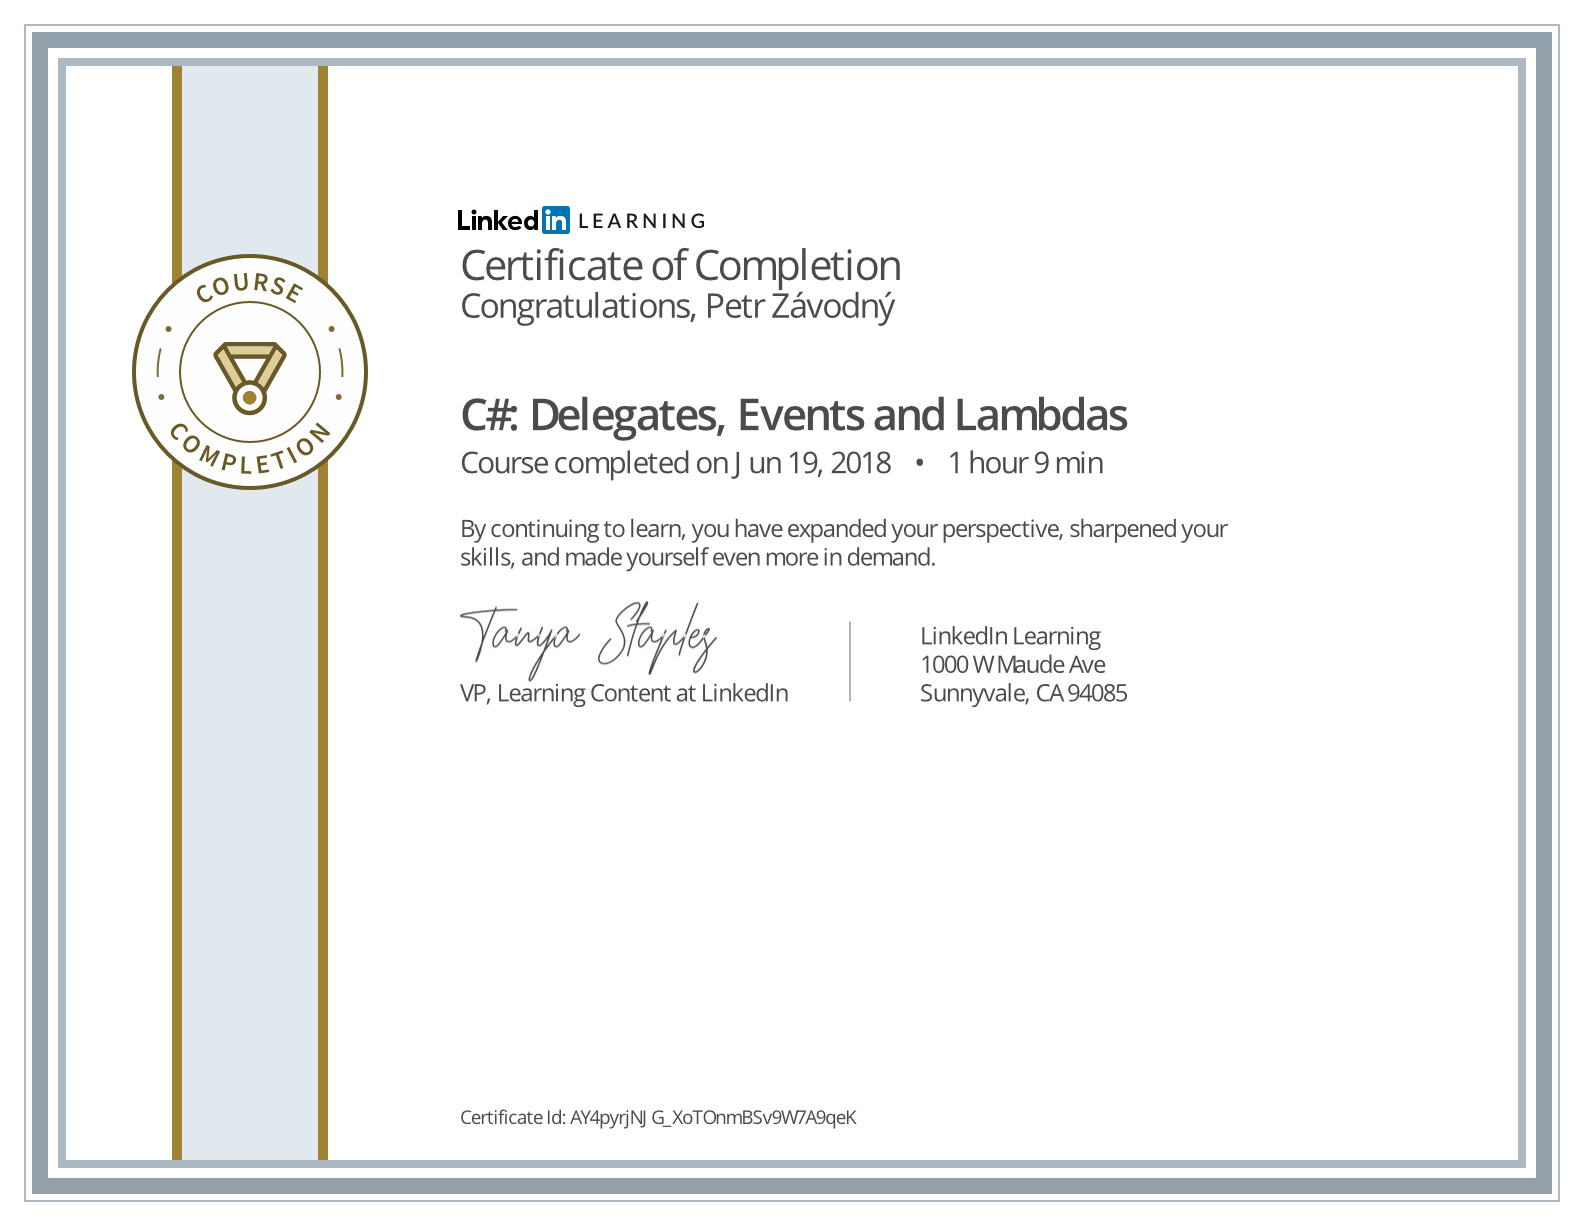 certificate C# Delegates, Events and Lambdas